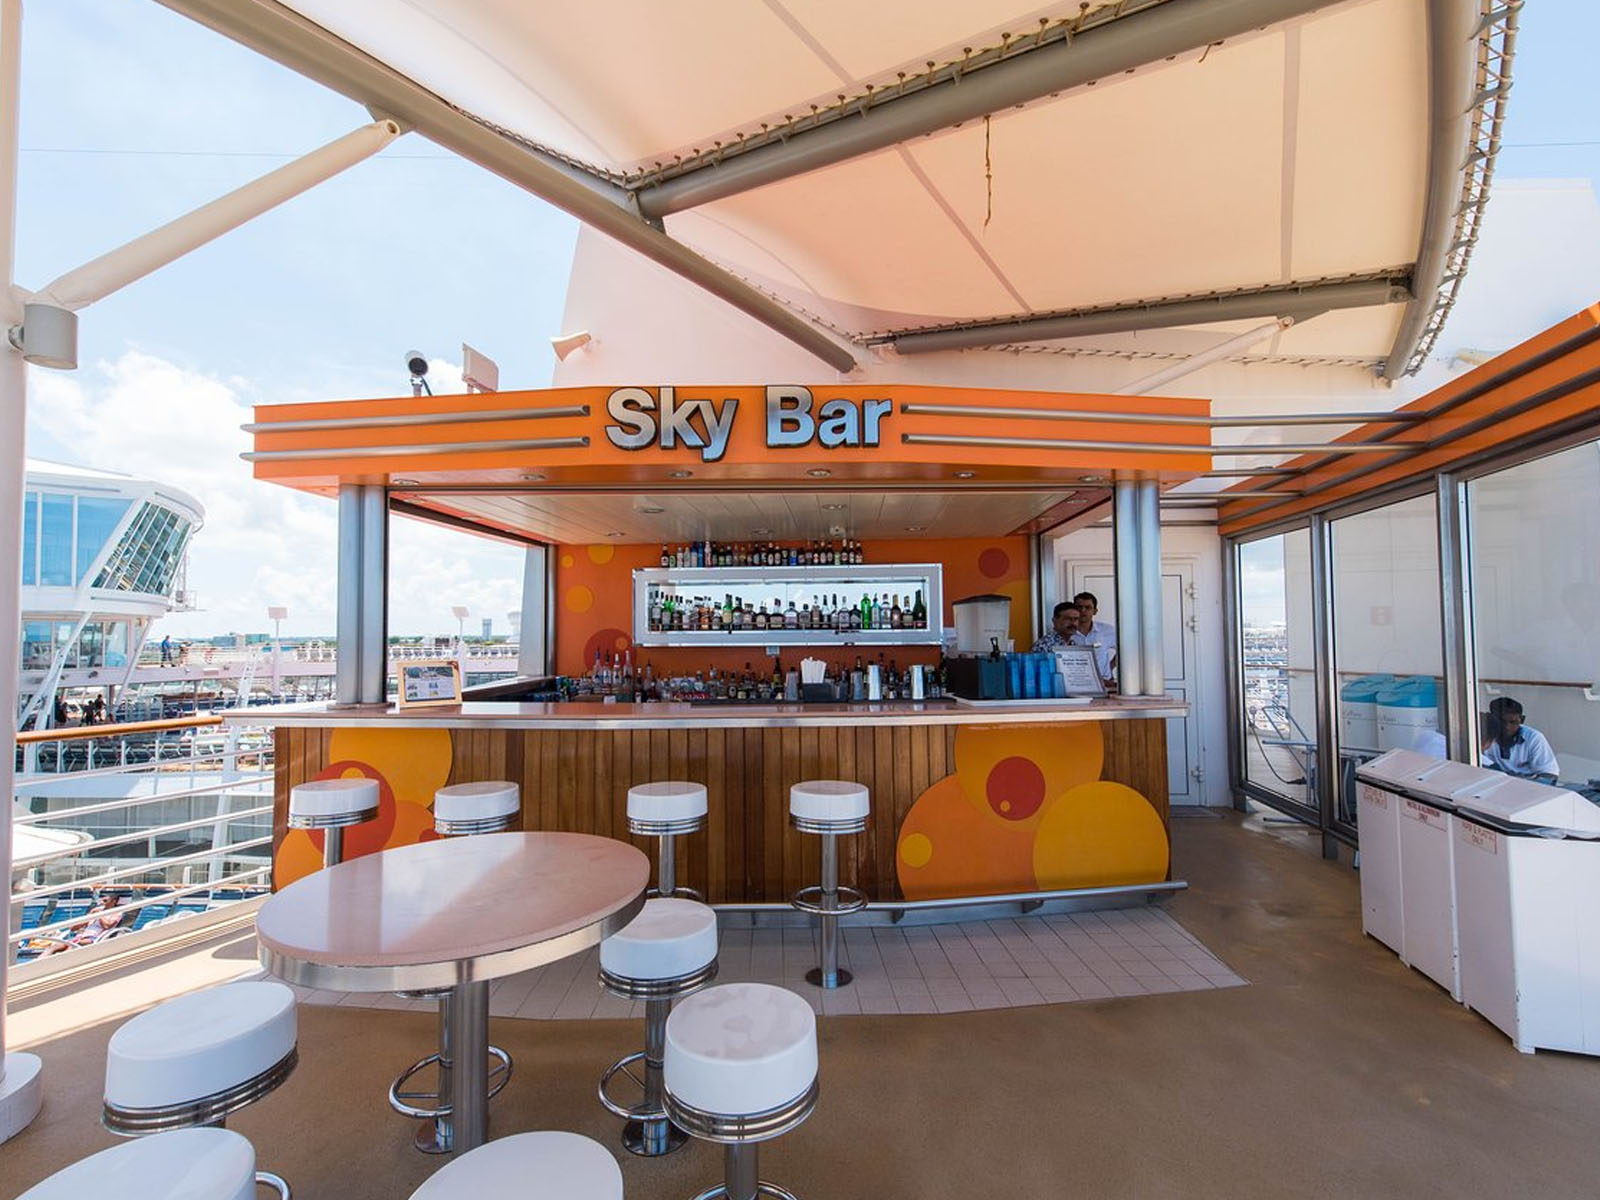 Royal Caribbean's Sky Bar